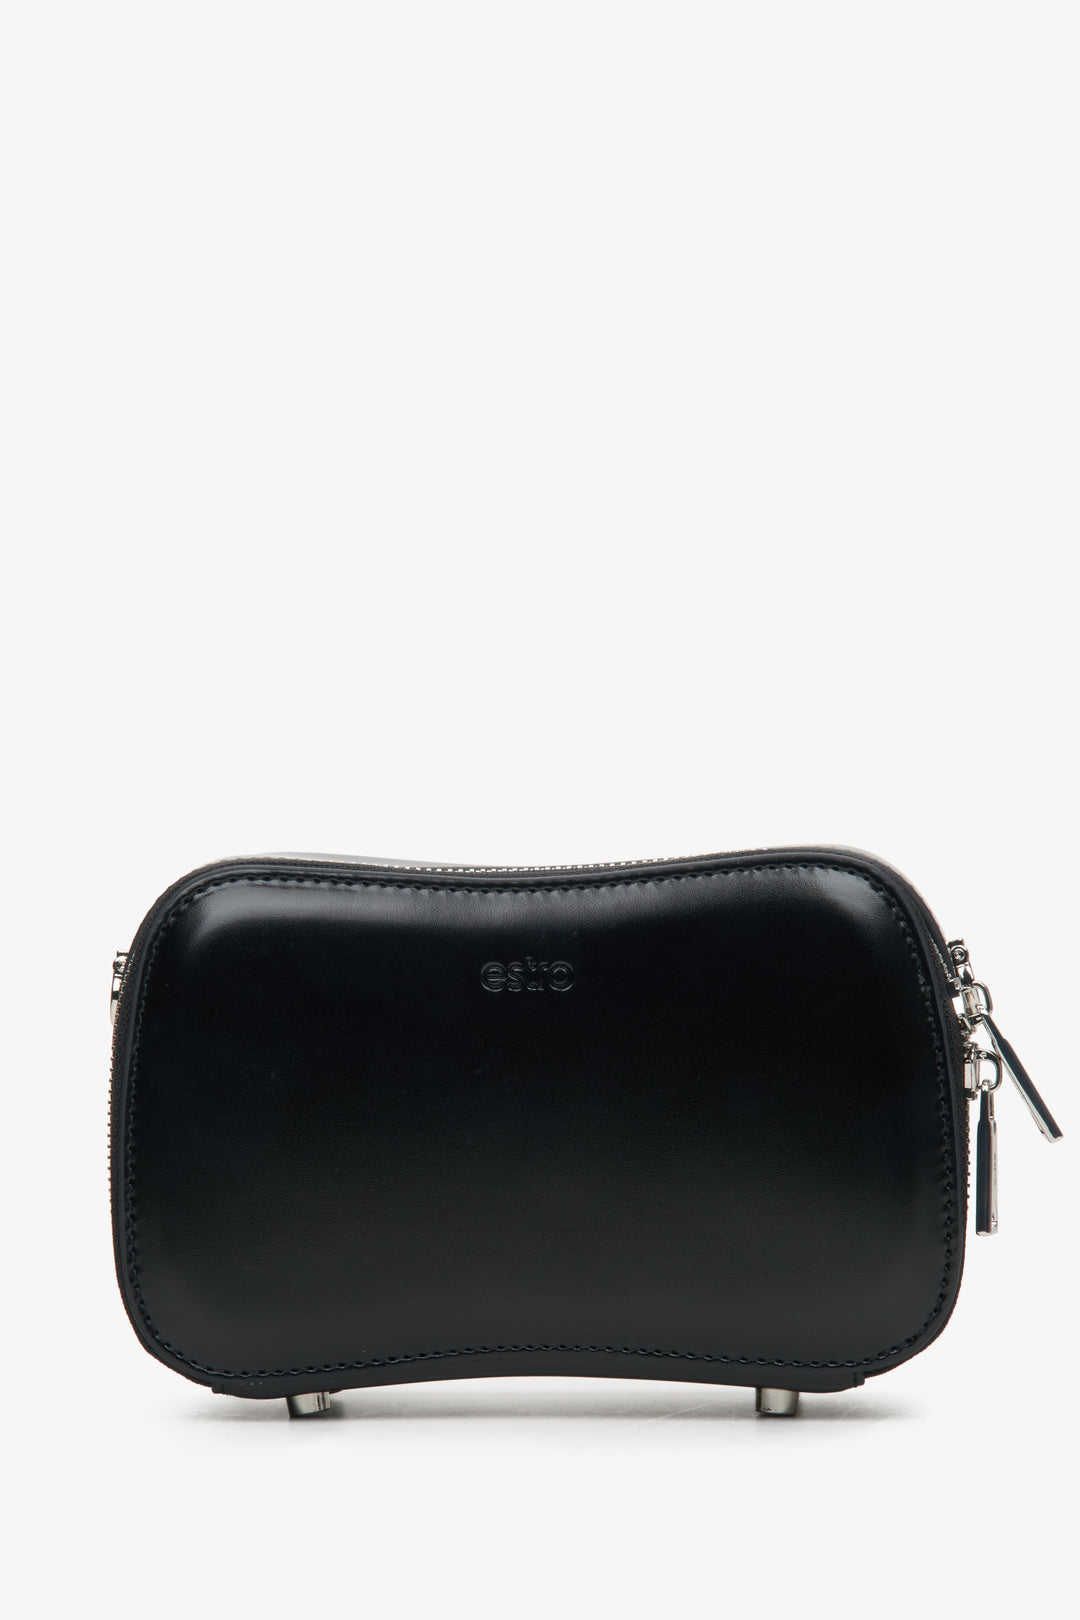 Small women's handbag made of genuine black leather by Estro.